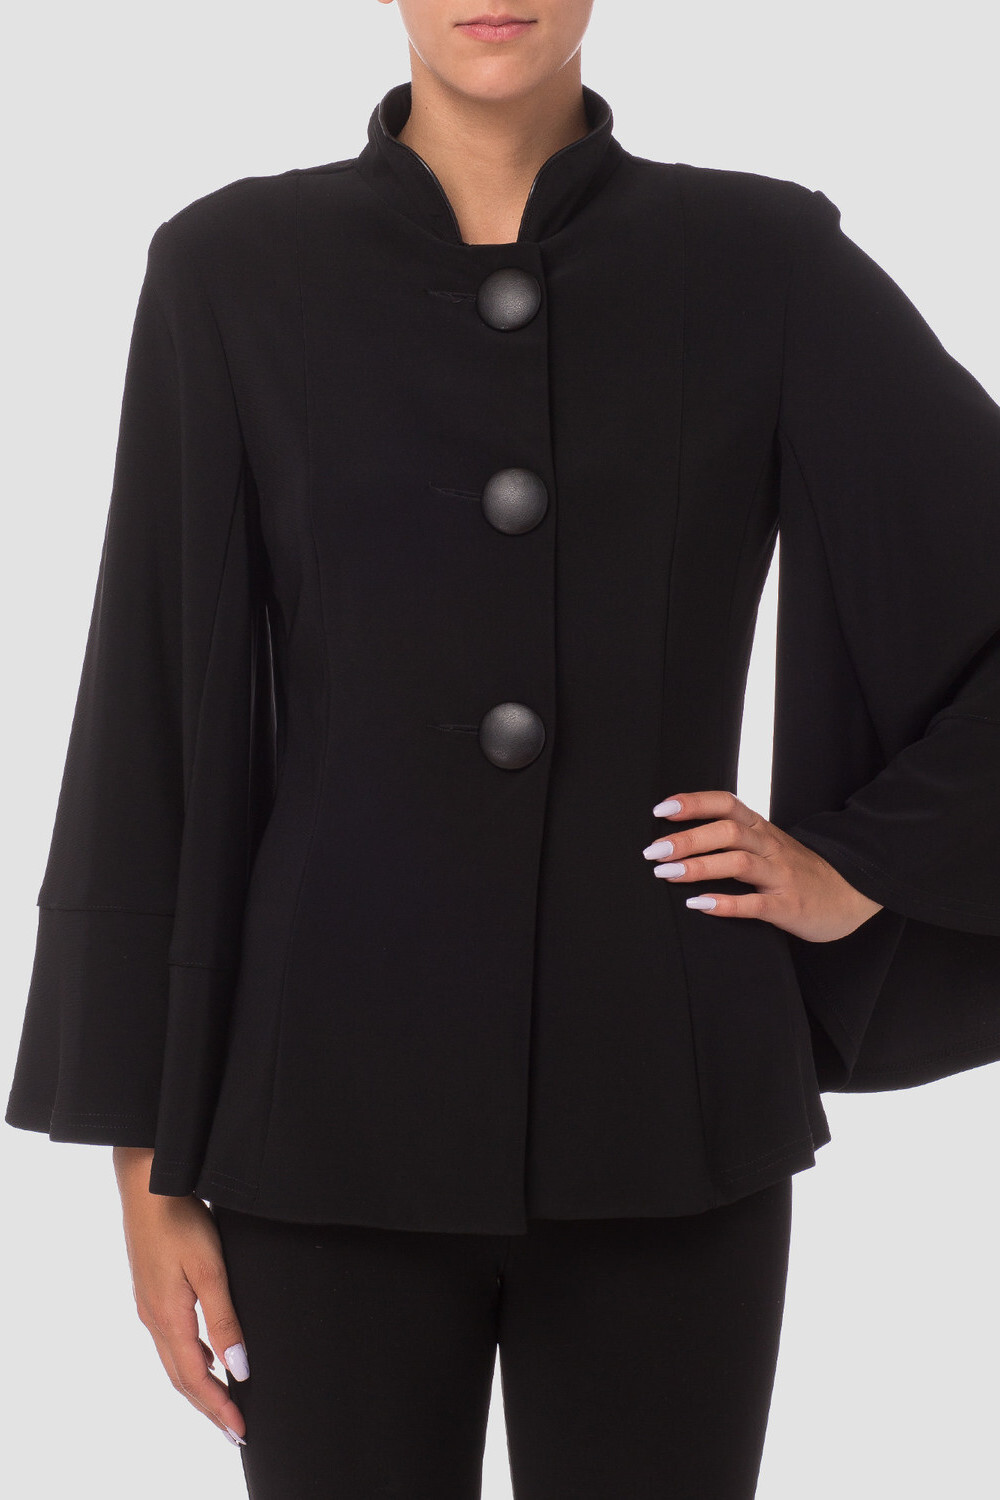 Joseph Ribkoff jacket style 173404. Black/black